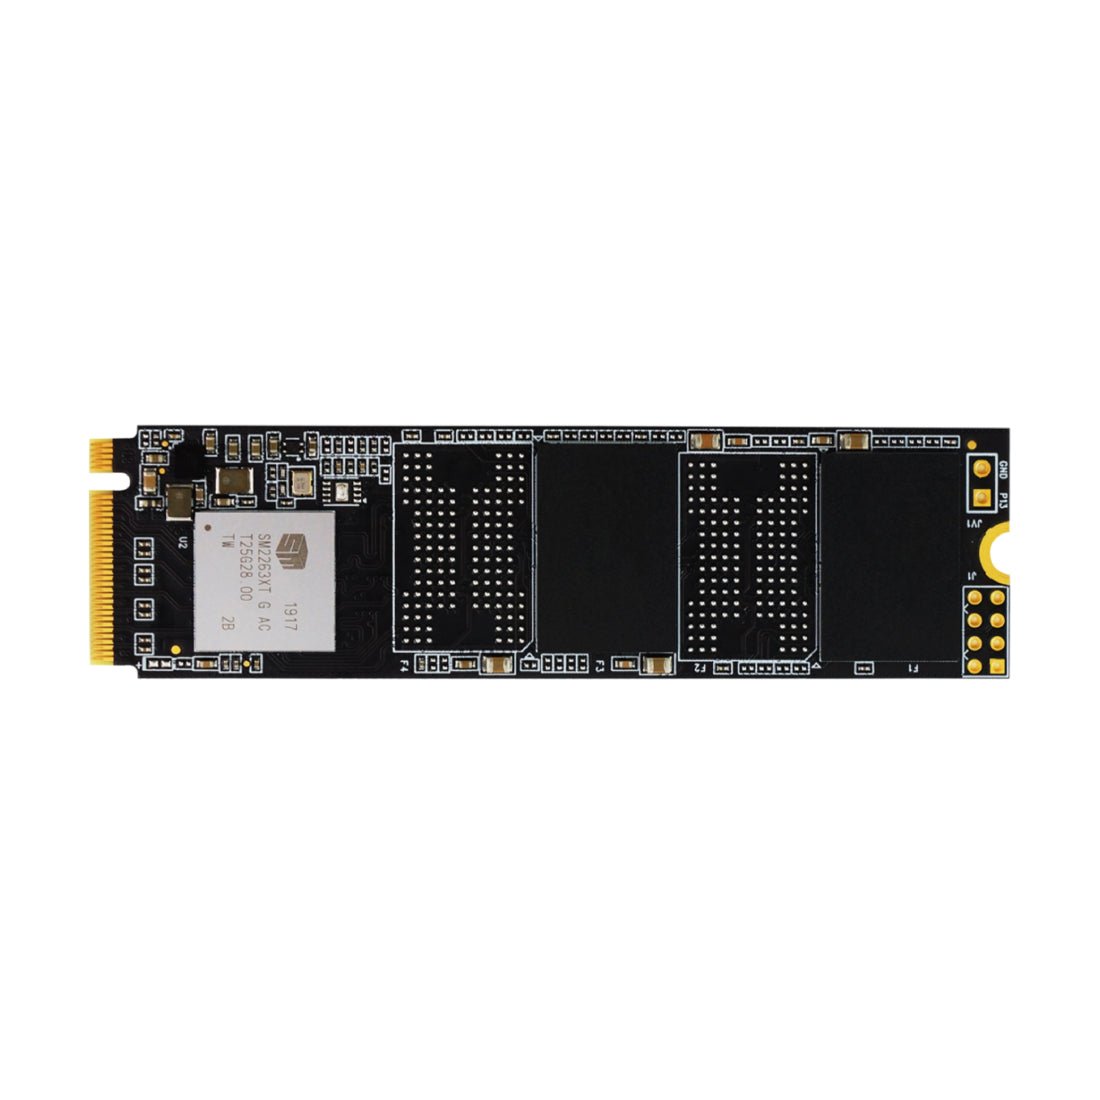 Biostar M760 Series 256GB Nvme PCIe M.2 SSD - Store 974 | ستور ٩٧٤